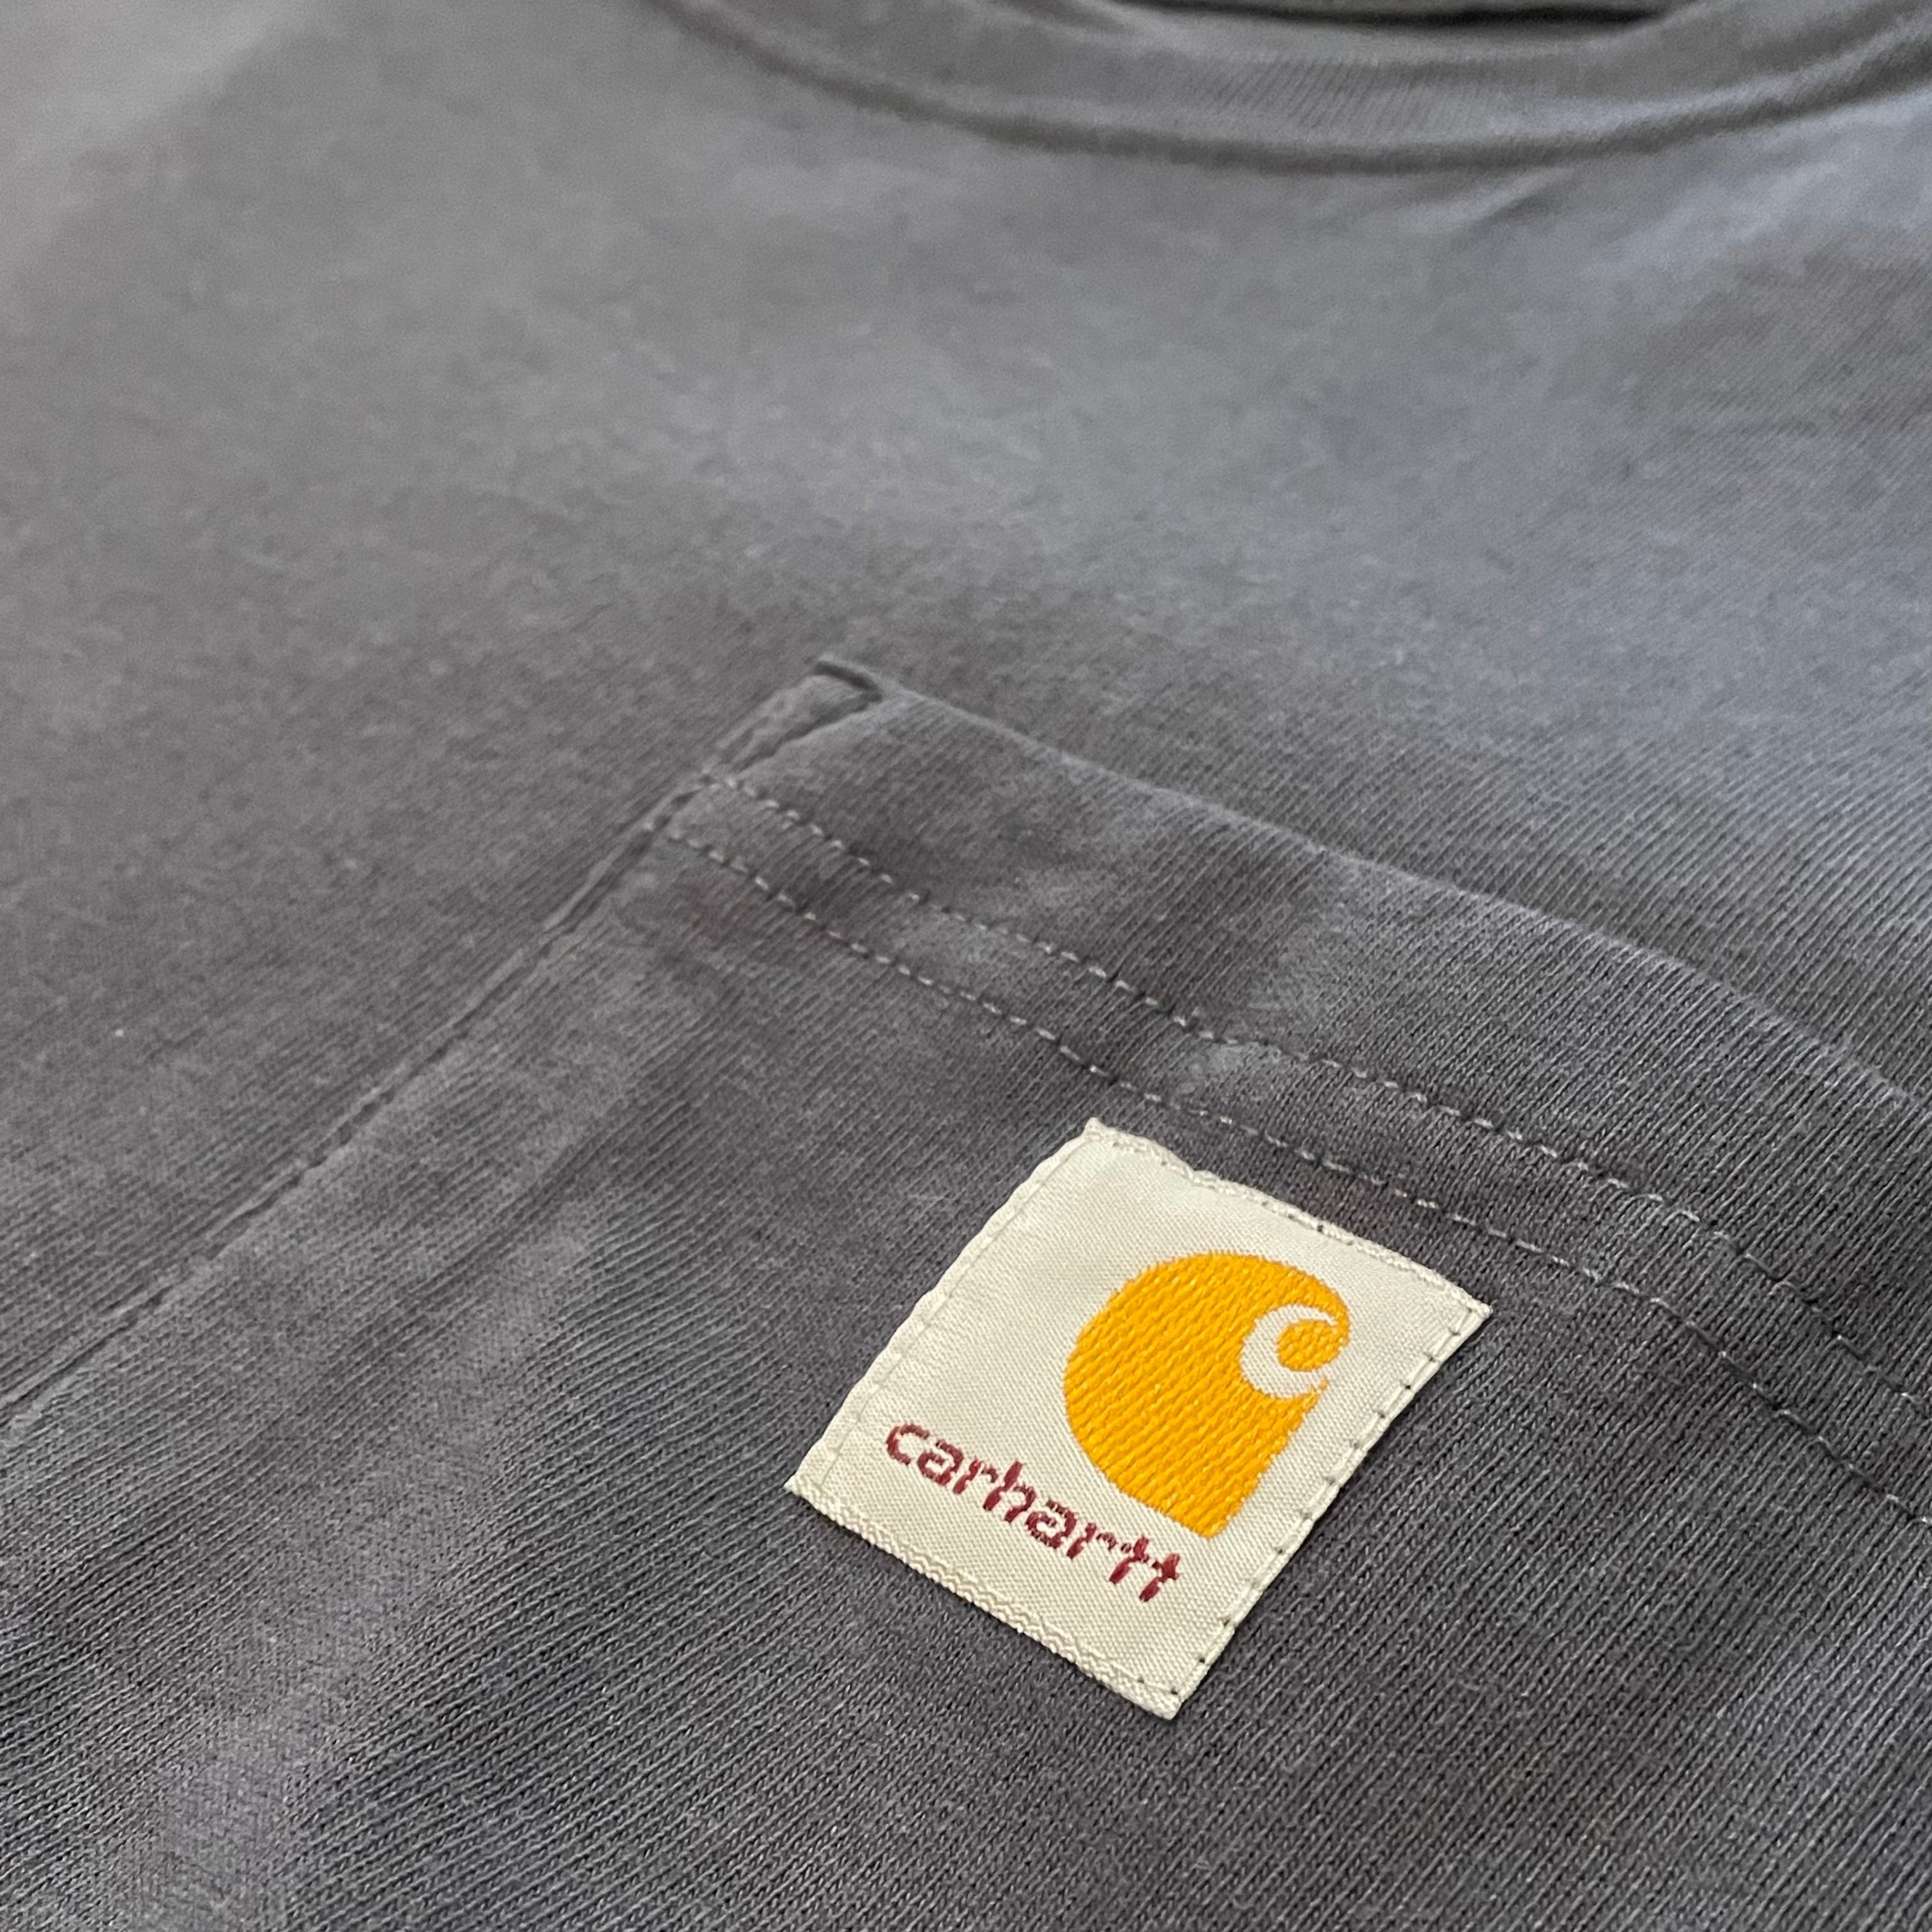 Carhartt】ポケット Tシャツ 胸ポケット ロゴ XL オーバーサイズ